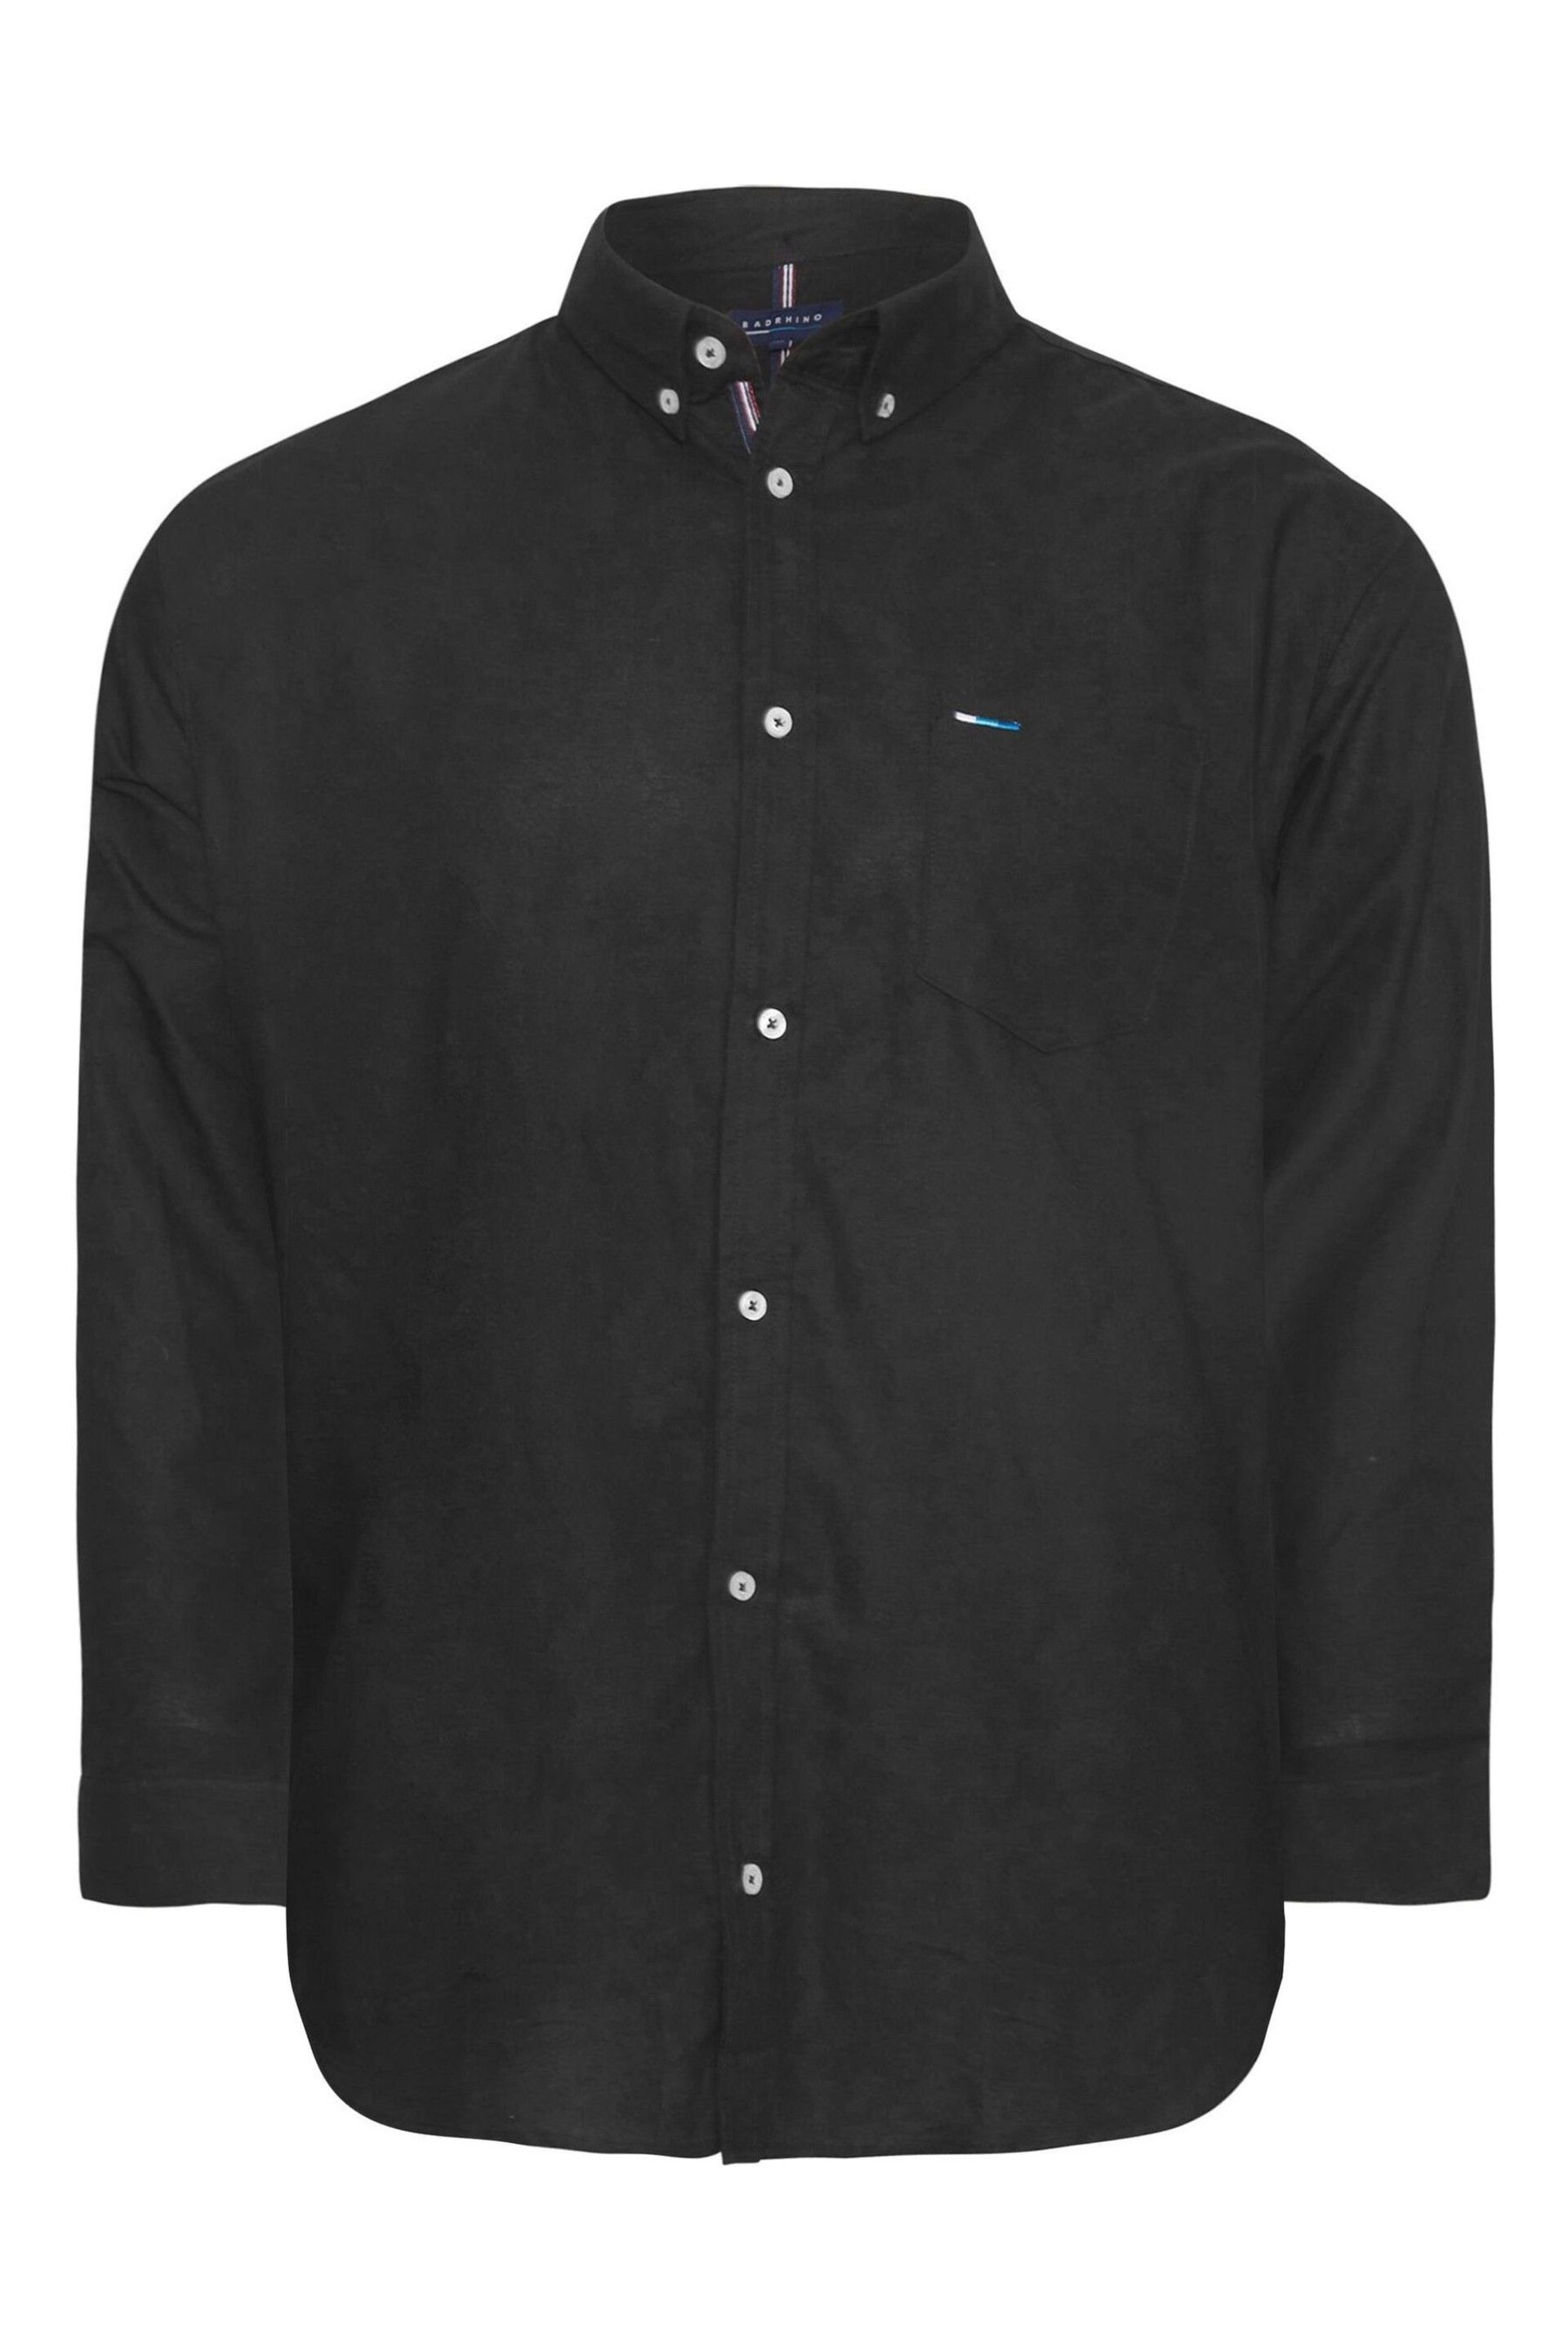 BadRhino Big & Tall Black Long Sleeve Shirt - Image 2 of 3